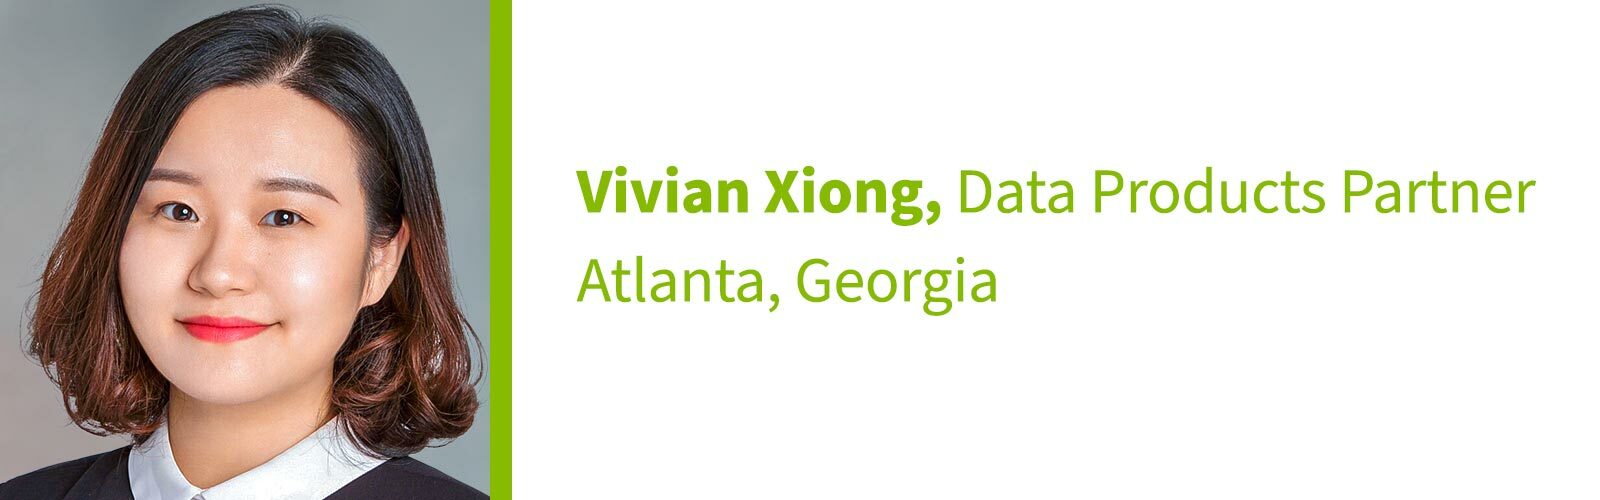 Vivian Xiong, Data Products Partner, Atlanta, Georgia 